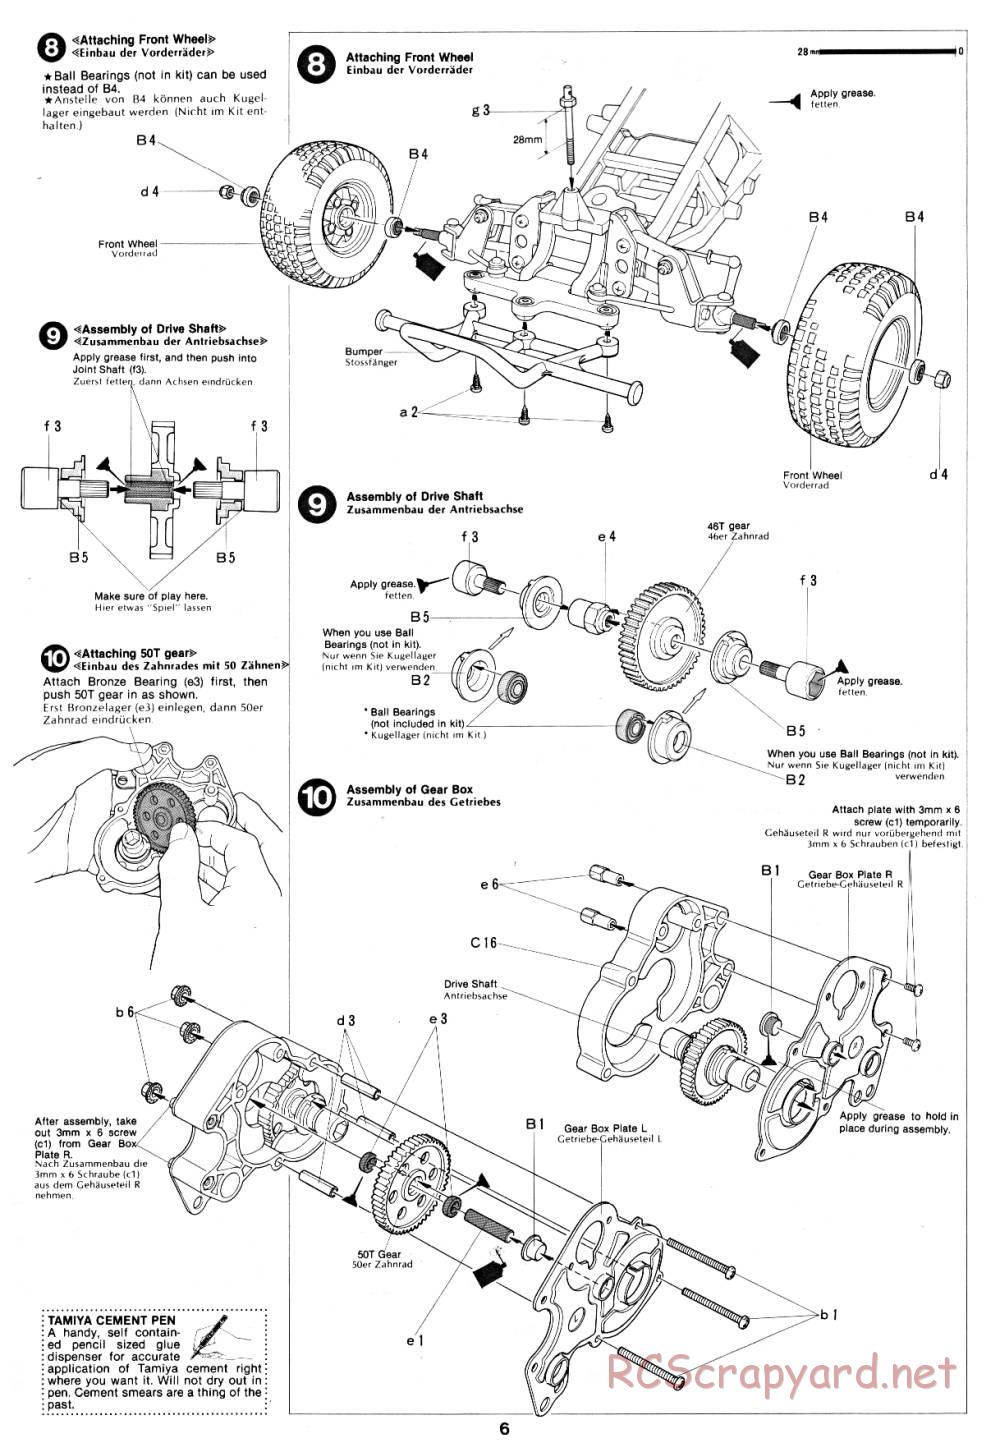 Tamiya - Subaru Brat - 58038 - Manual - Page 6